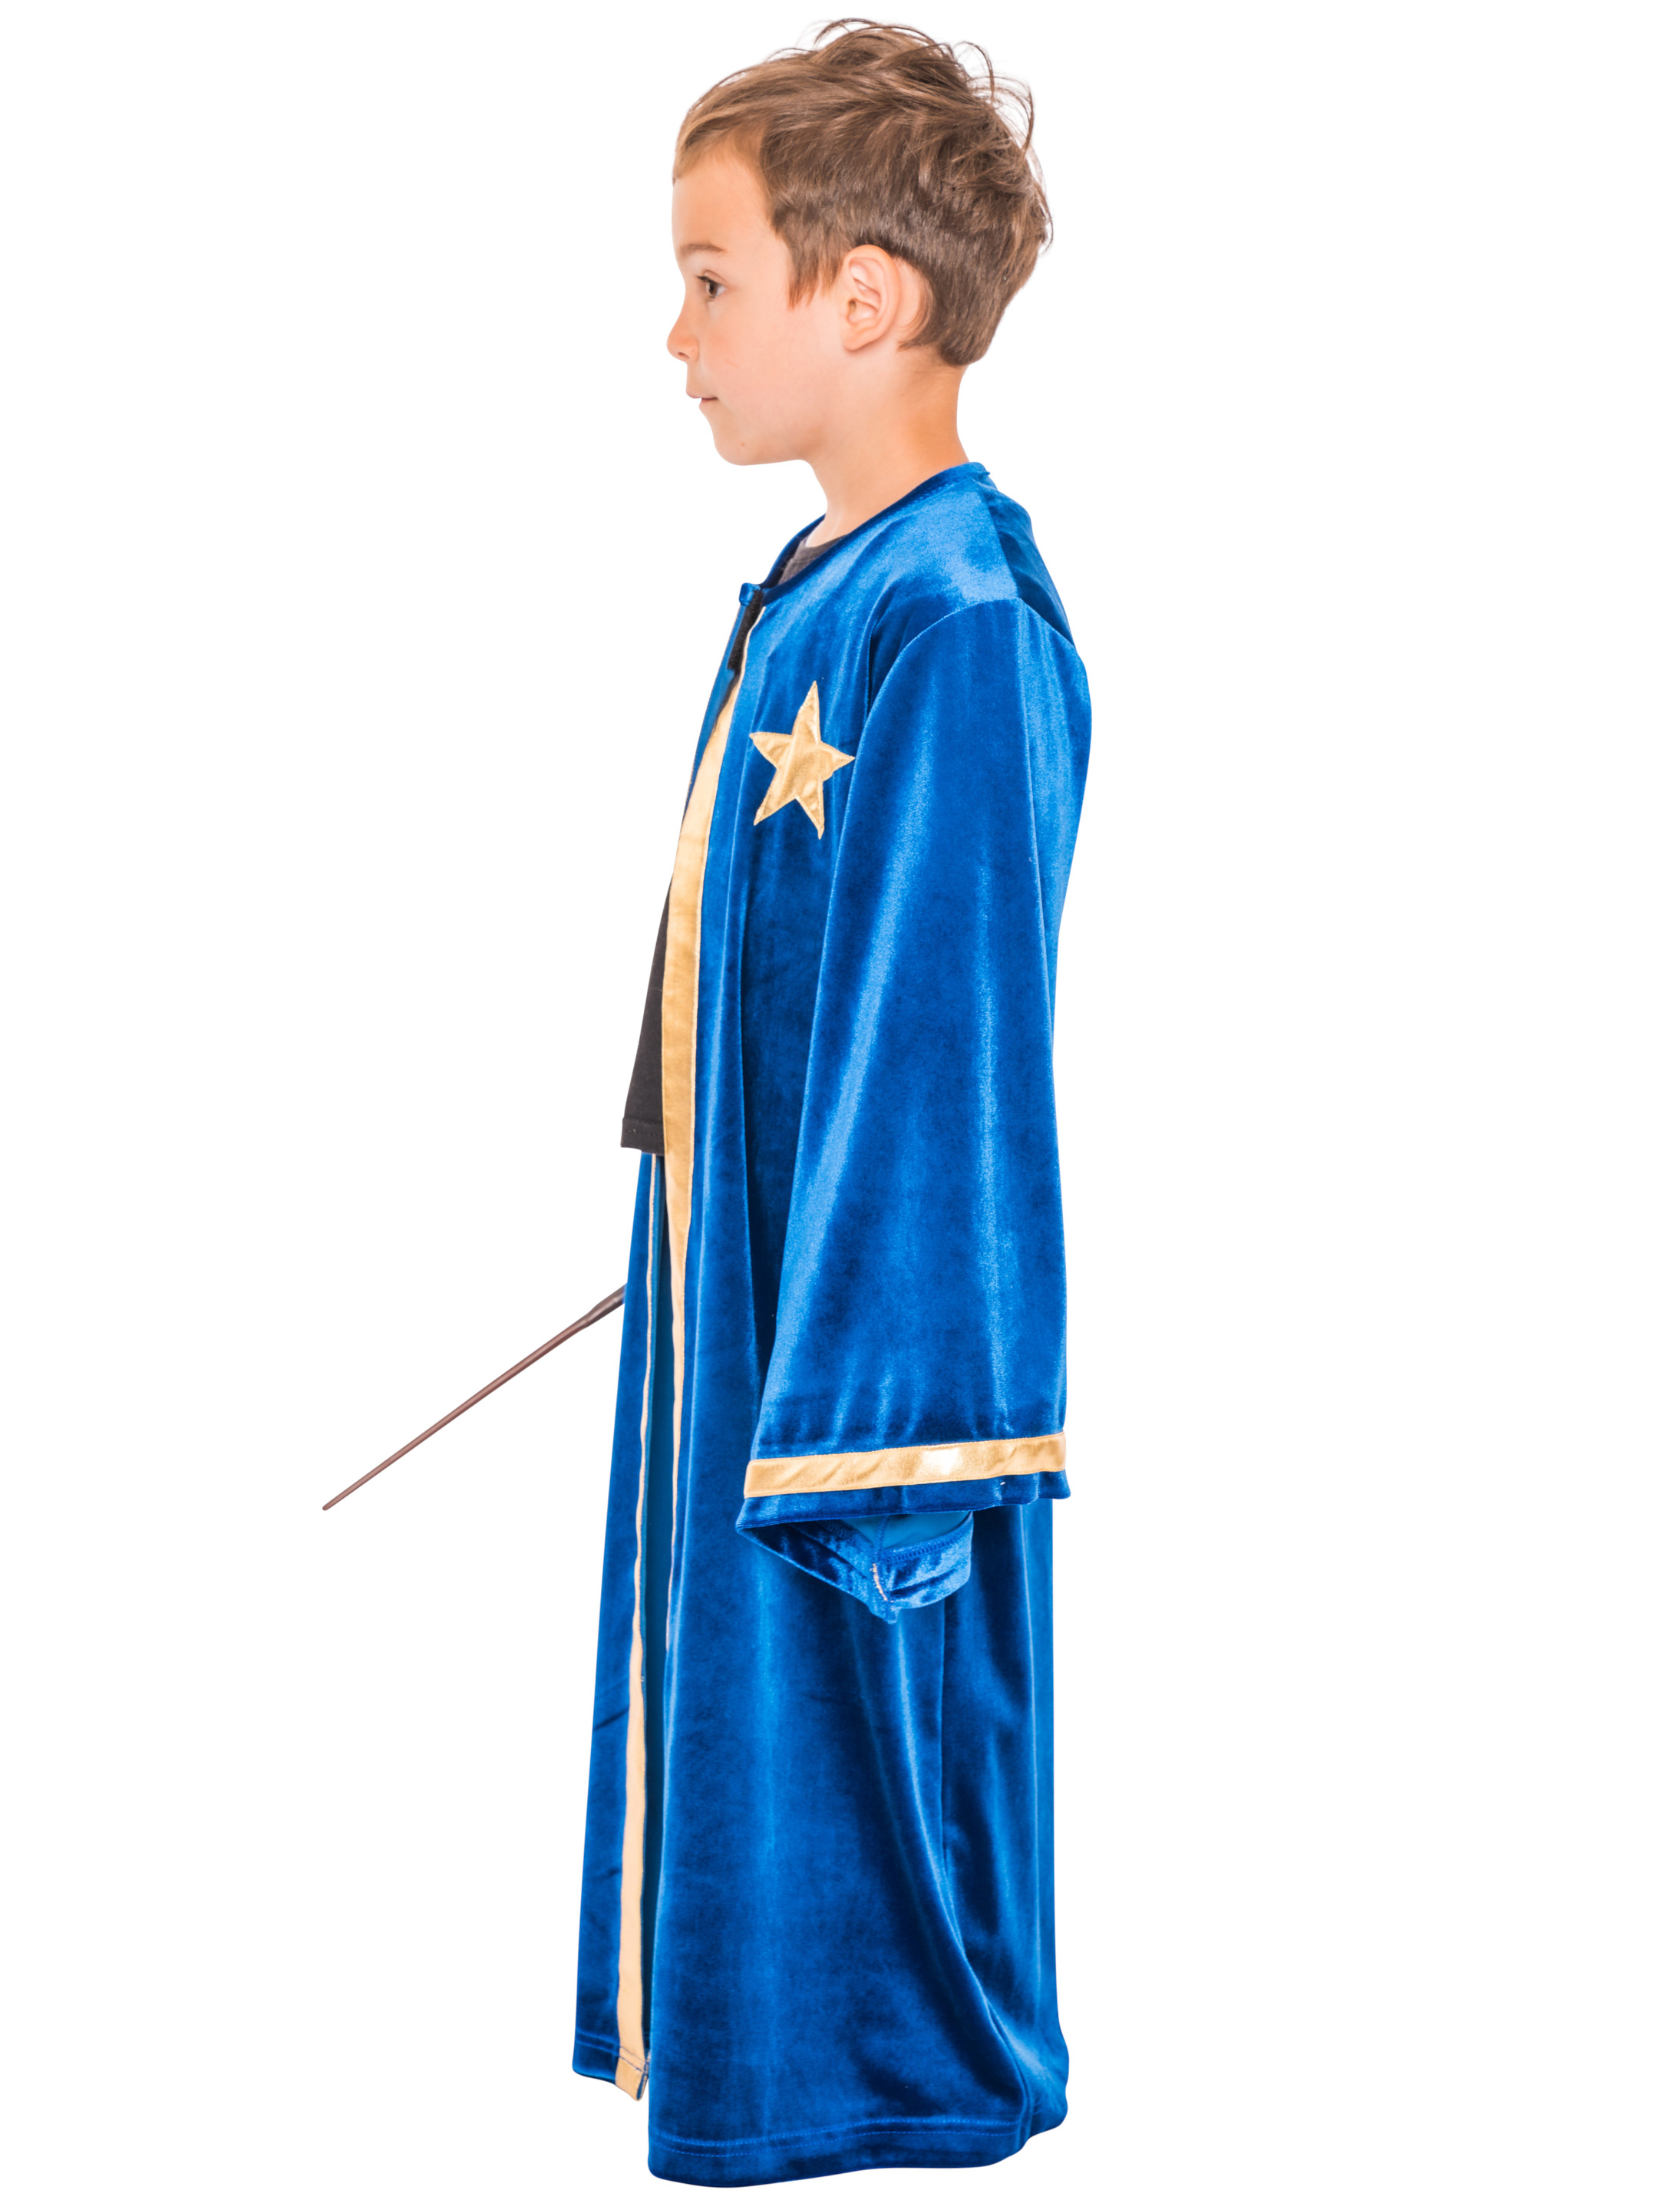 Mantel Zauberer Kinder blau 152